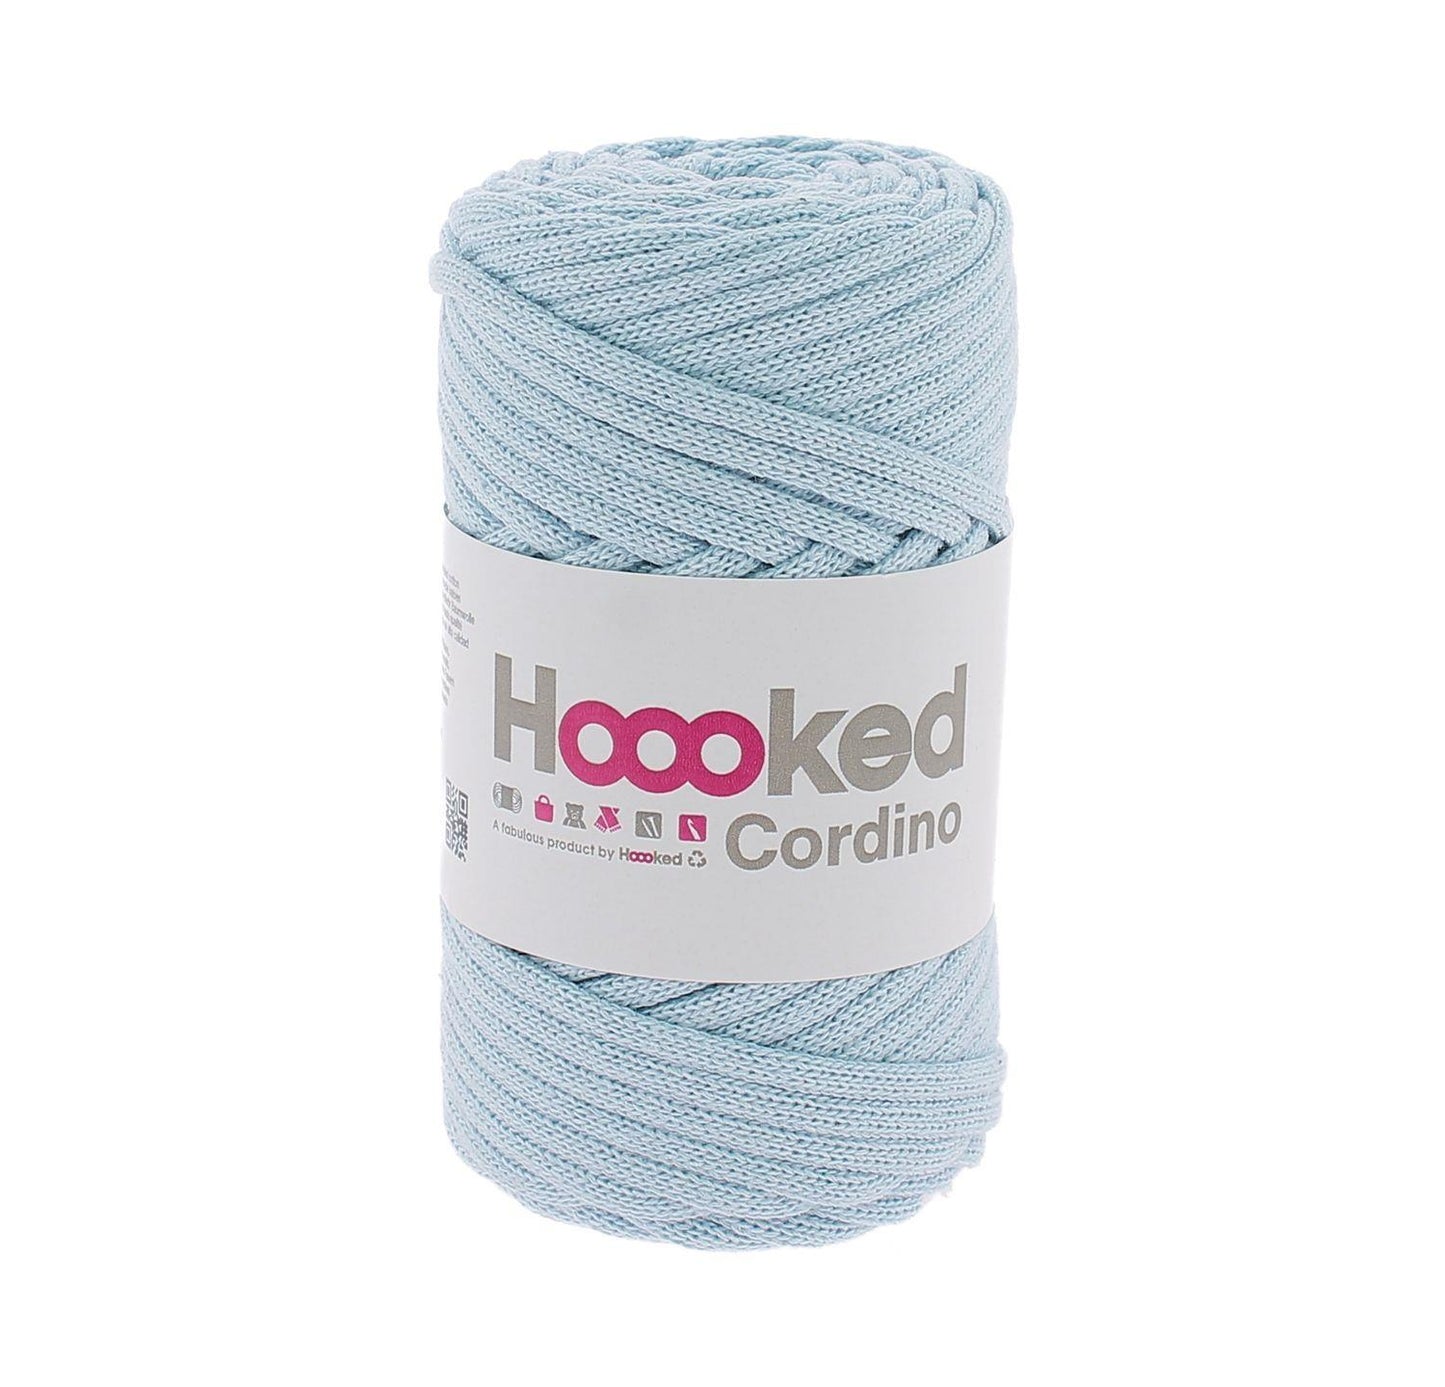 [Hoooked] Cordino Powder Blue Cotton Macrame Cord - 54M, 150g